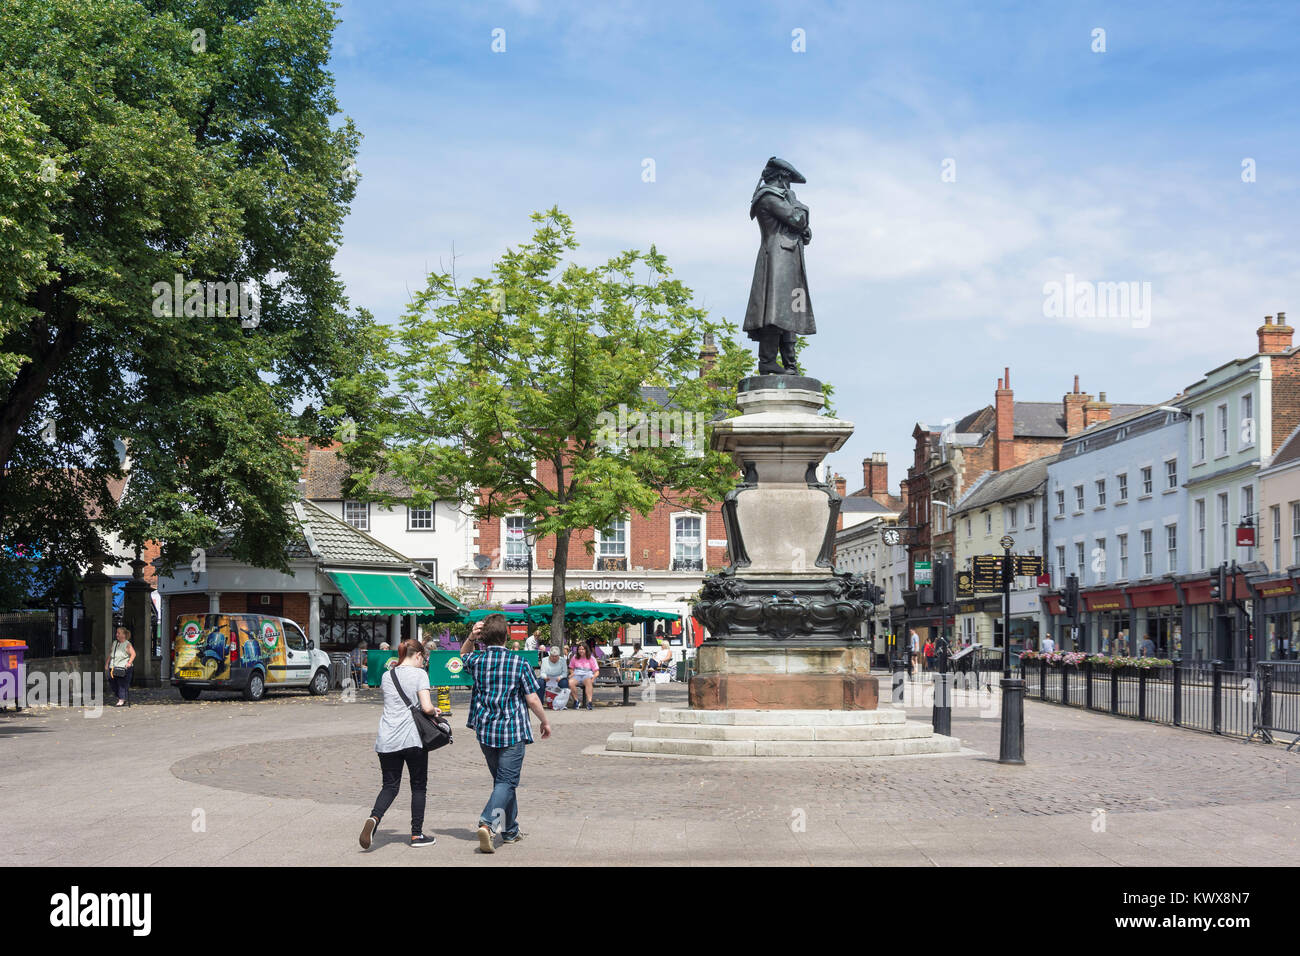 St Paul's Square, Bedford, Bedfordshire, England, United Kingdom Banque D'Images